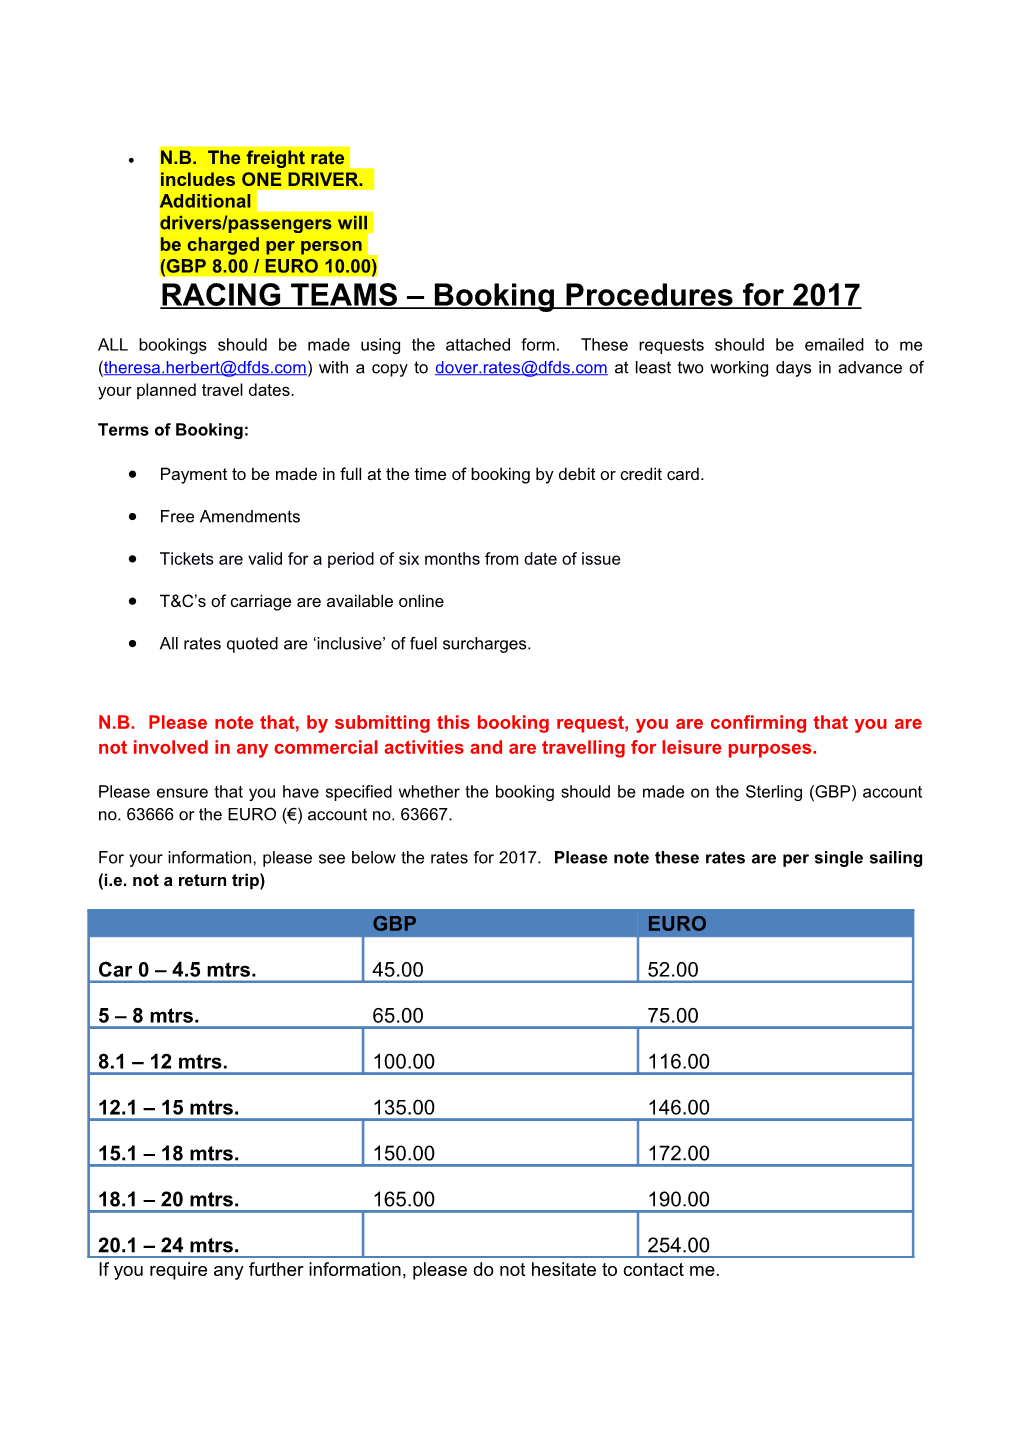 RACING TEAMS Booking Procedures for 2017